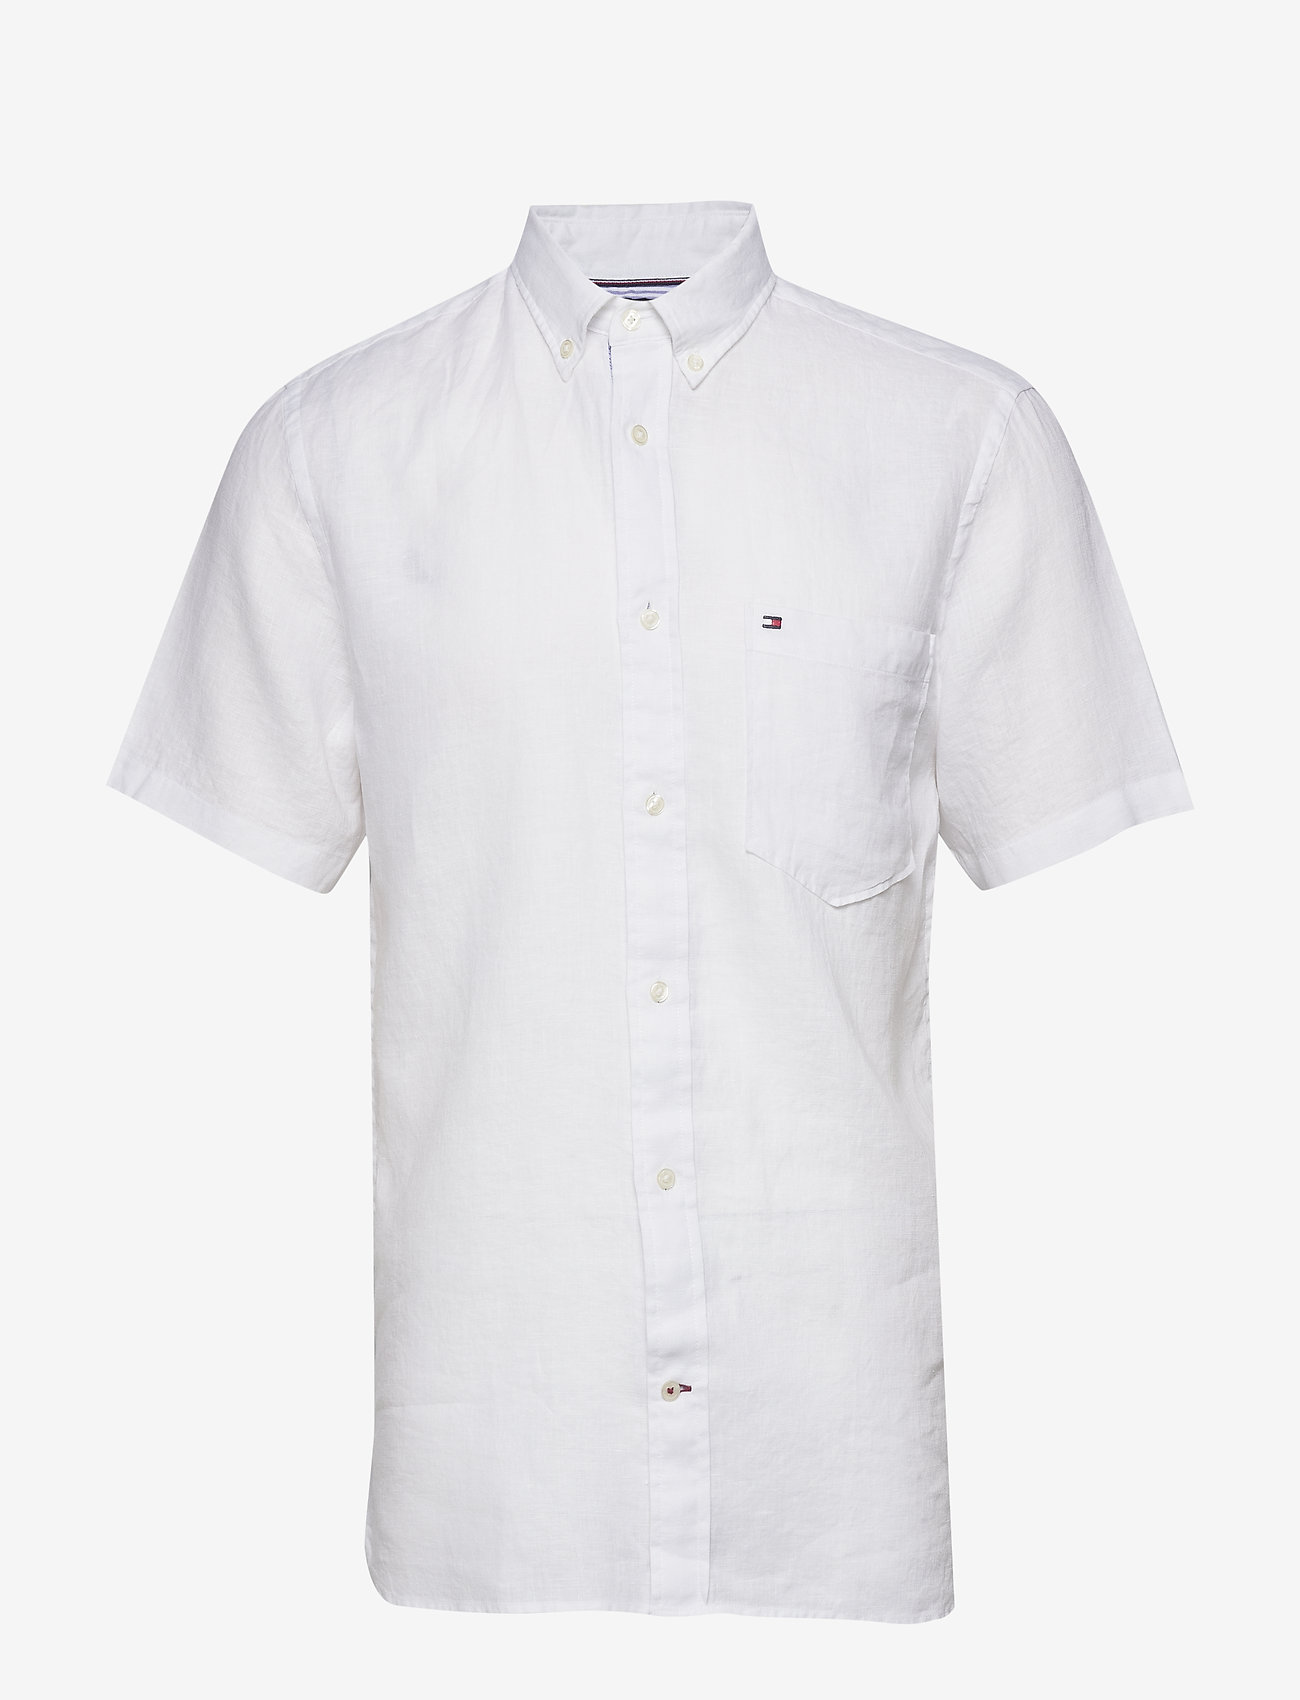 Linen Shirt S/s (White) (44.95 